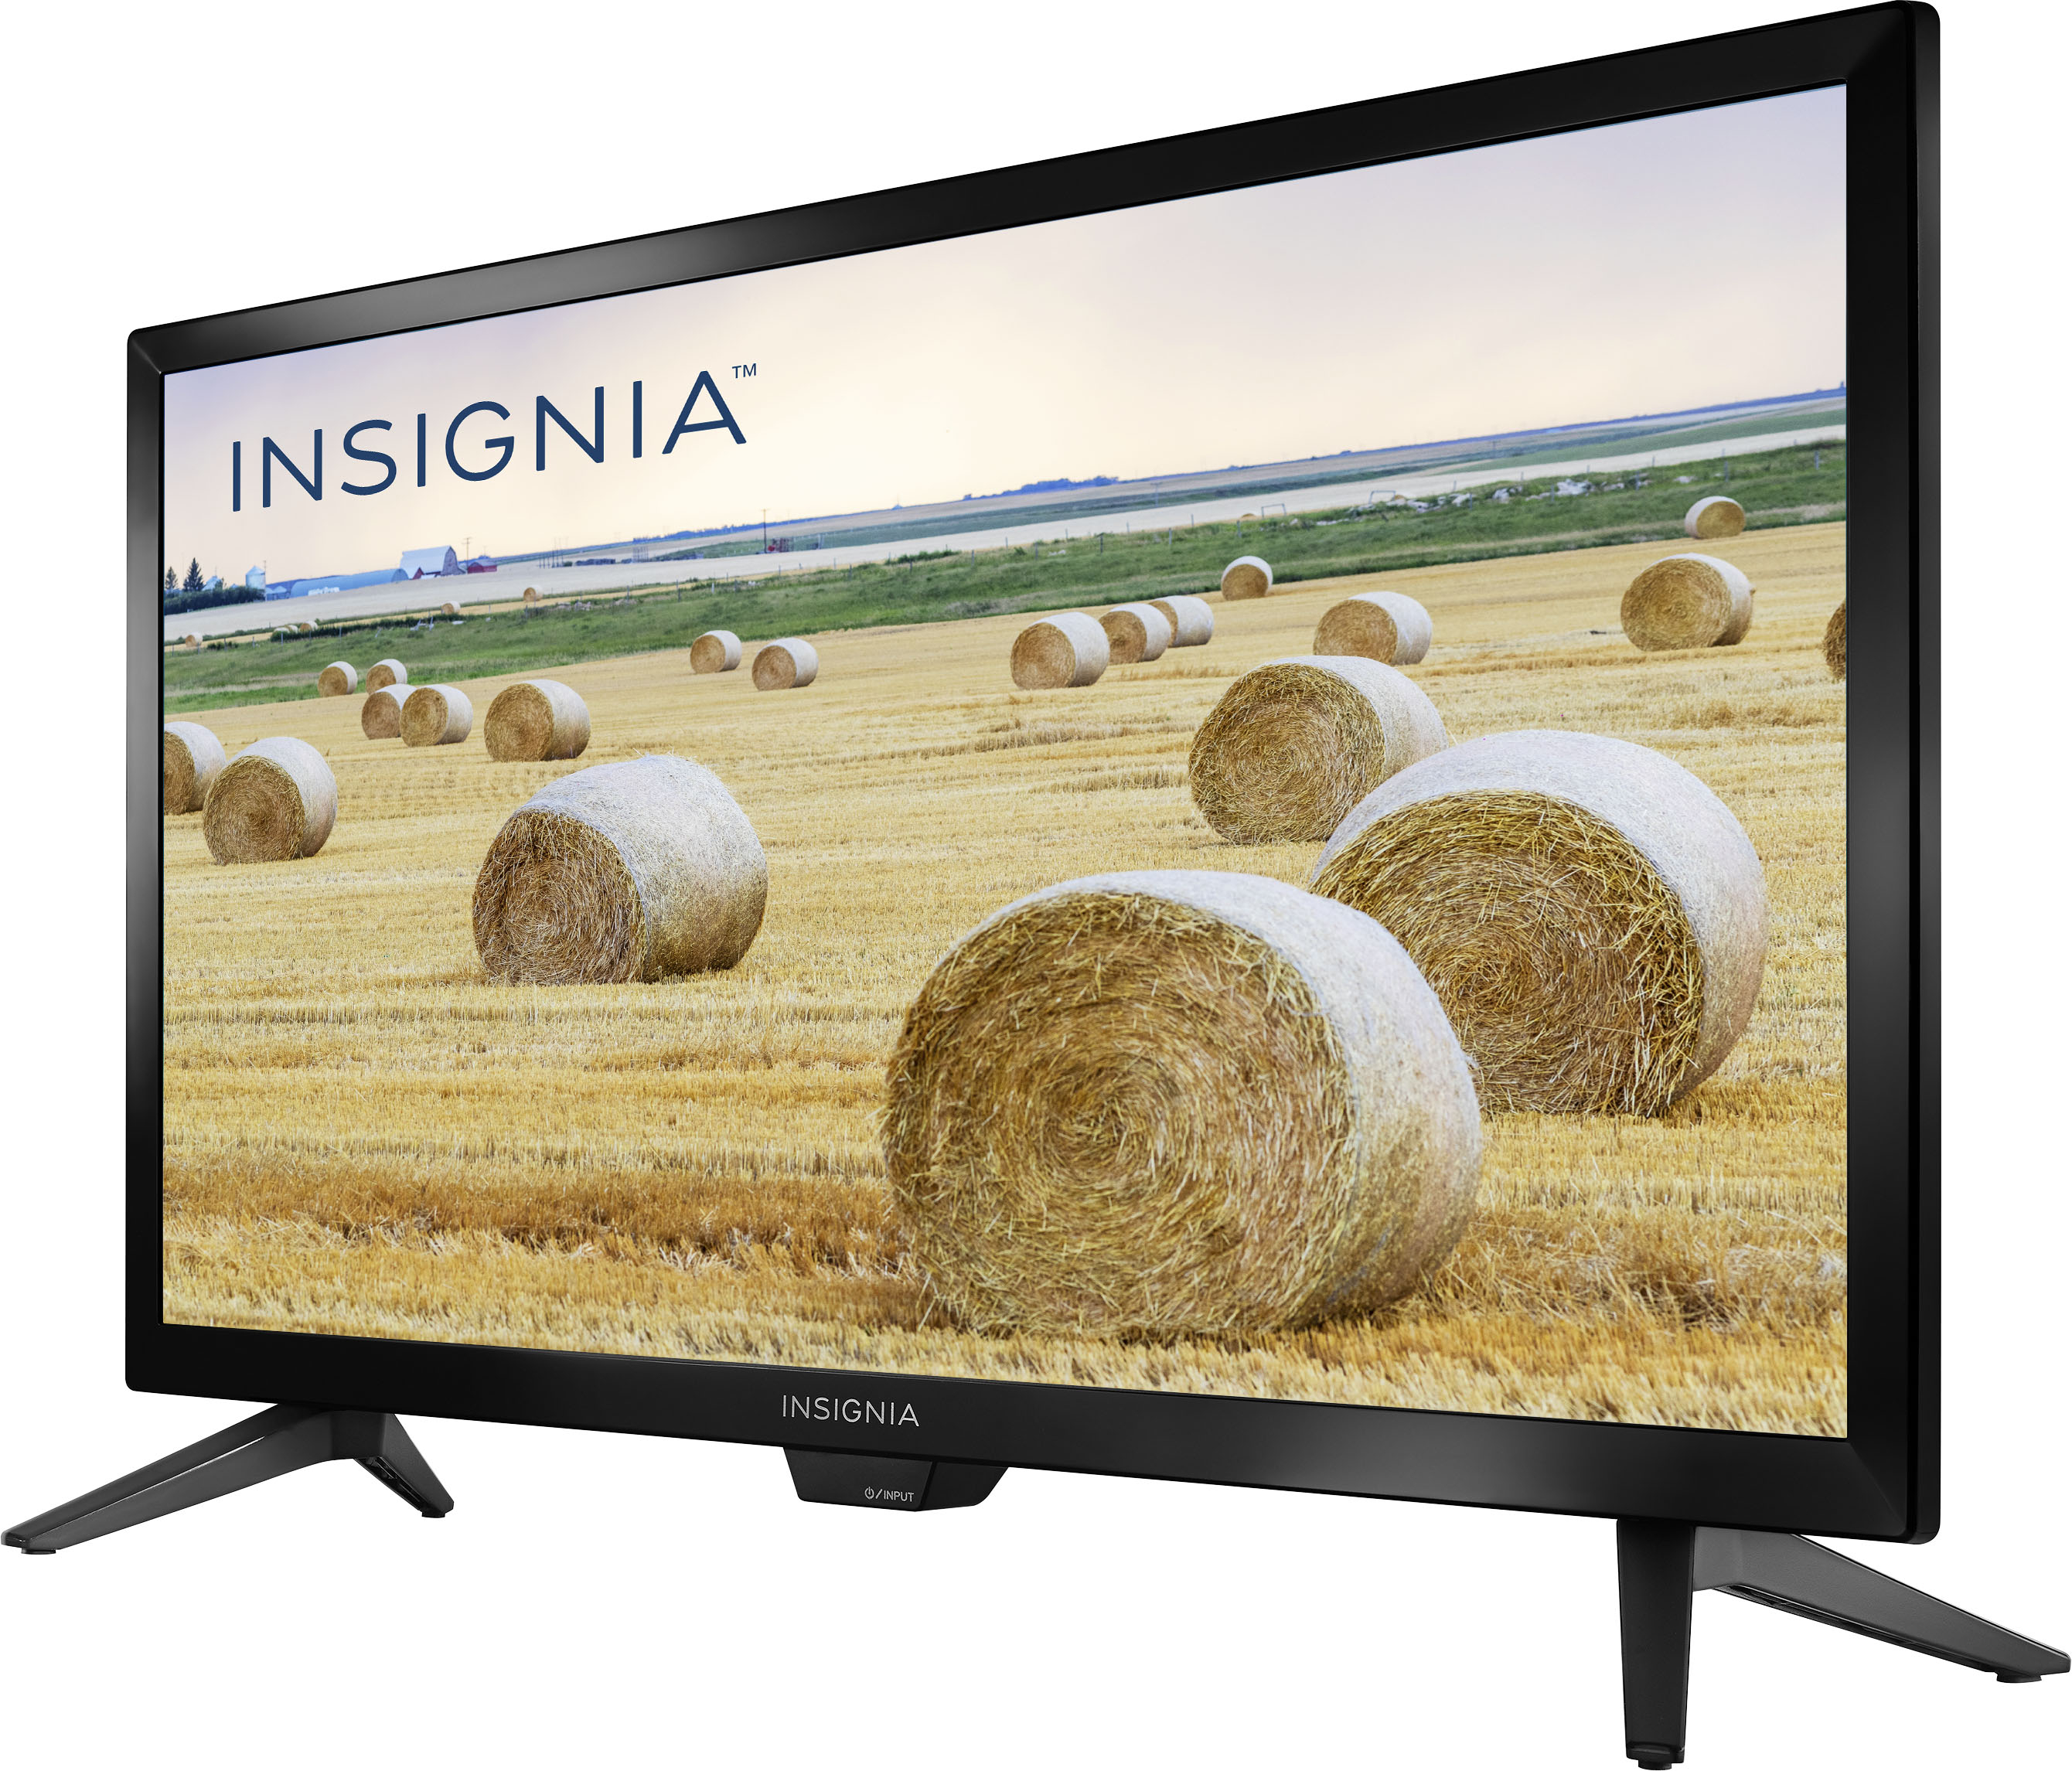 Best Buy Insignia 22 Class N10 Series Led Hd Tv Ns 22d510na19